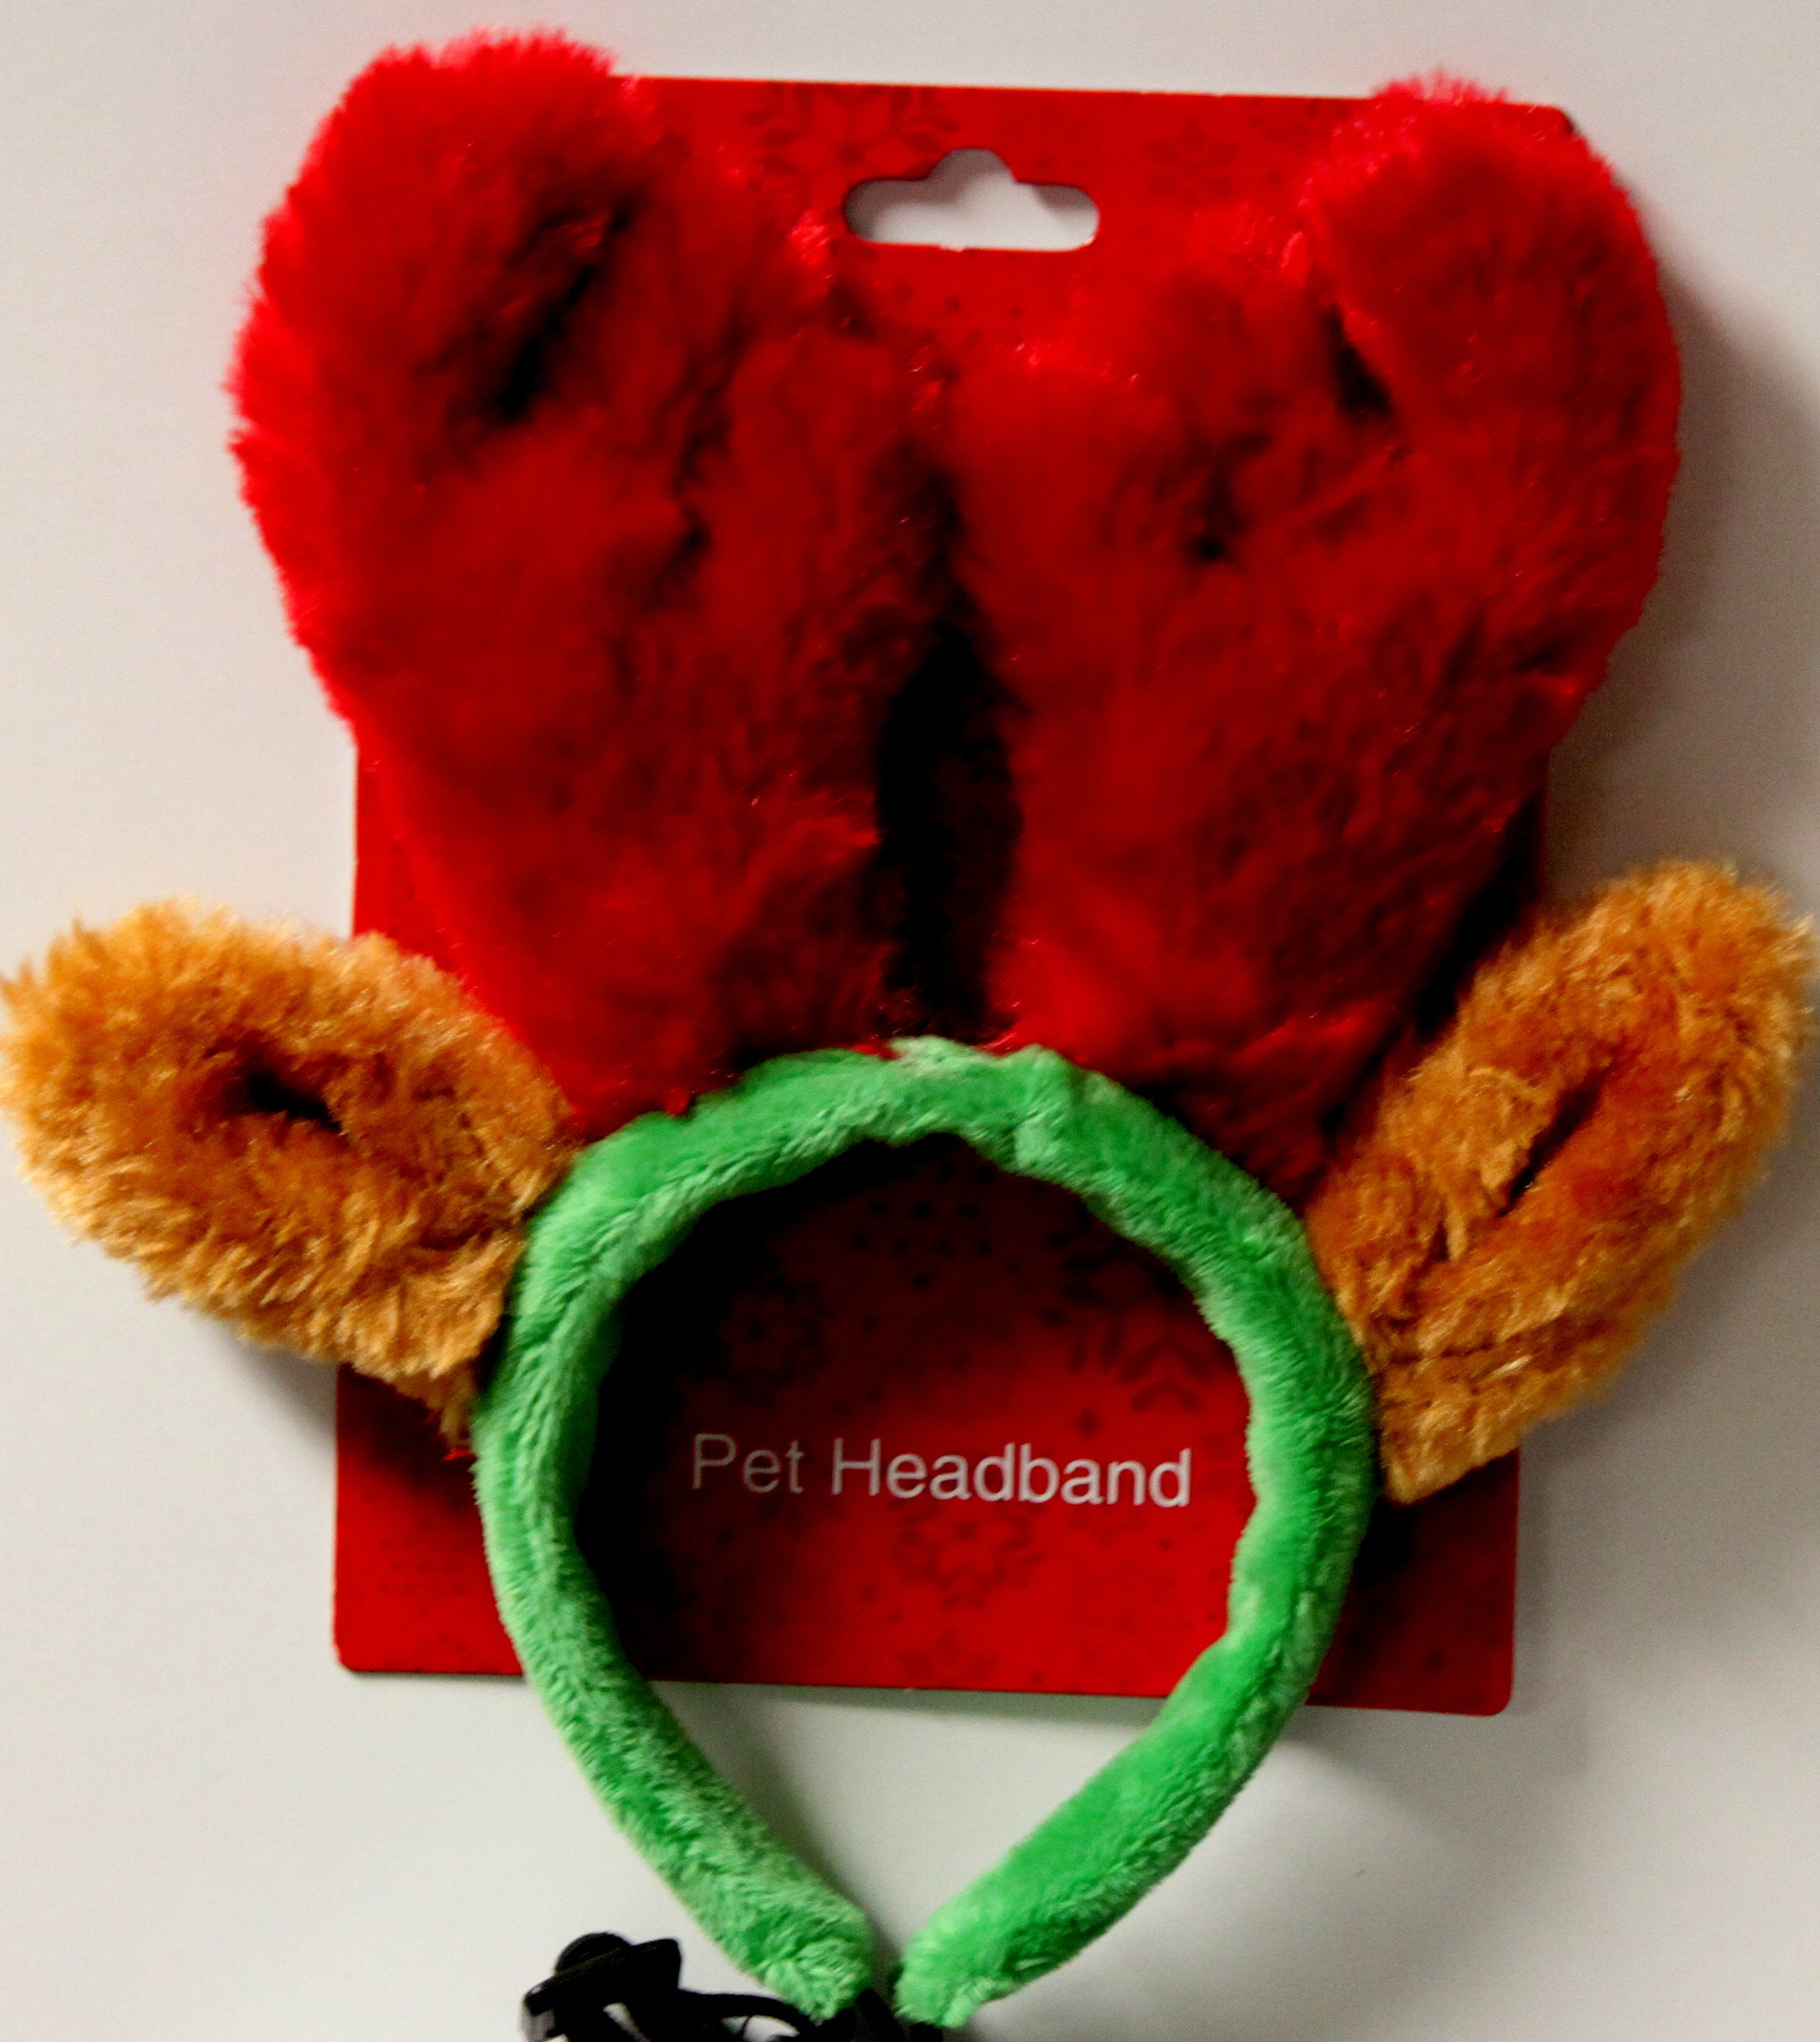 Pet Central Reindeer Pet Headband